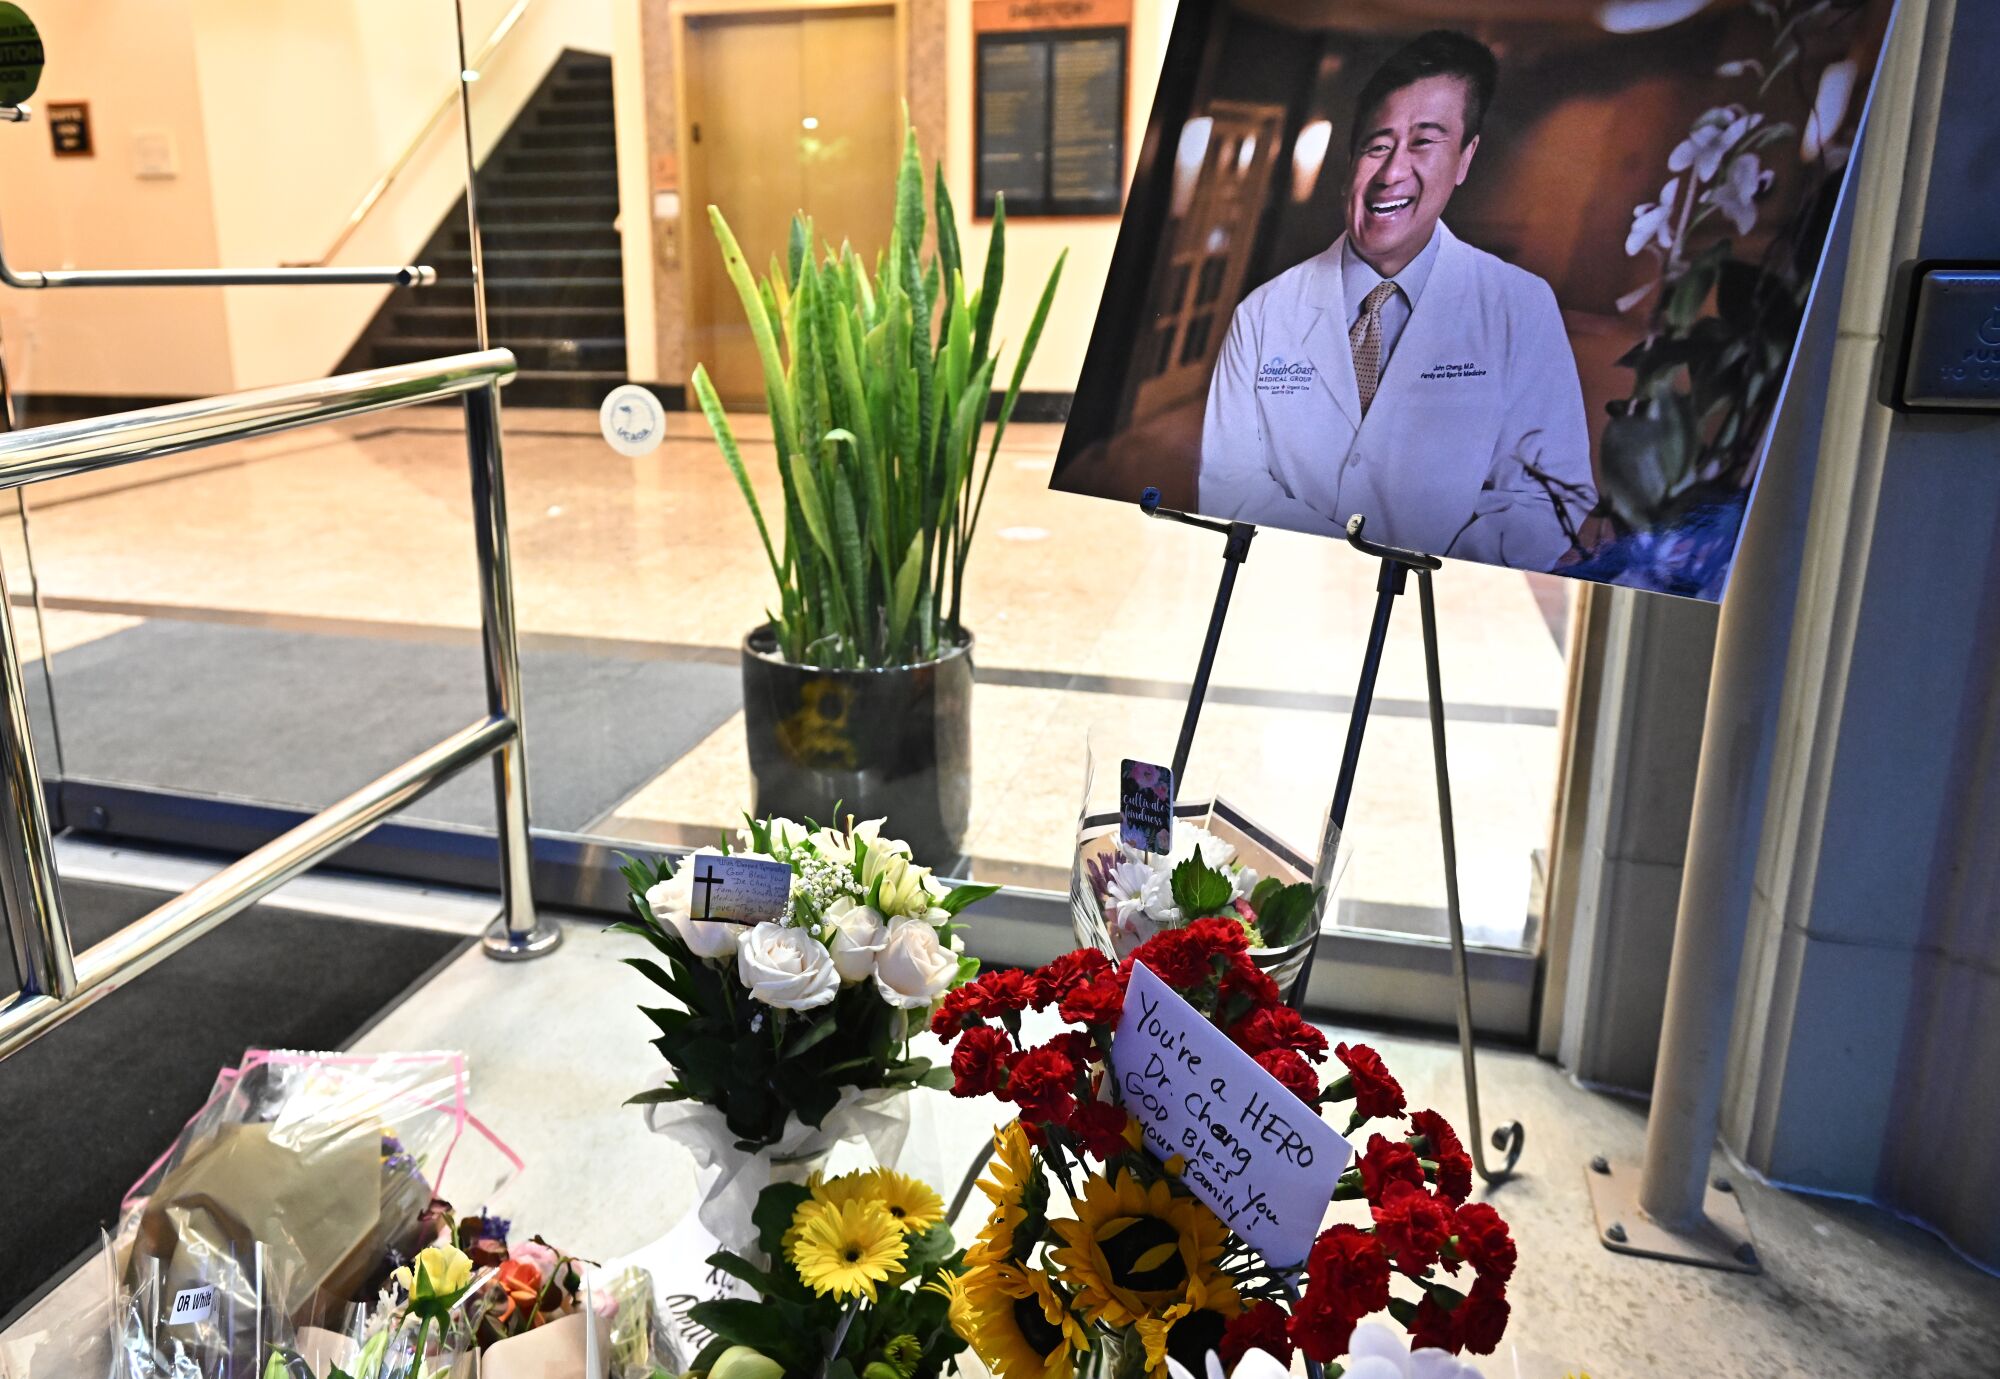 A photo of Dr. John Cheng, a 52-year-old victim who was killed in Sunday's shooting at Geneva Presbyterian Church.